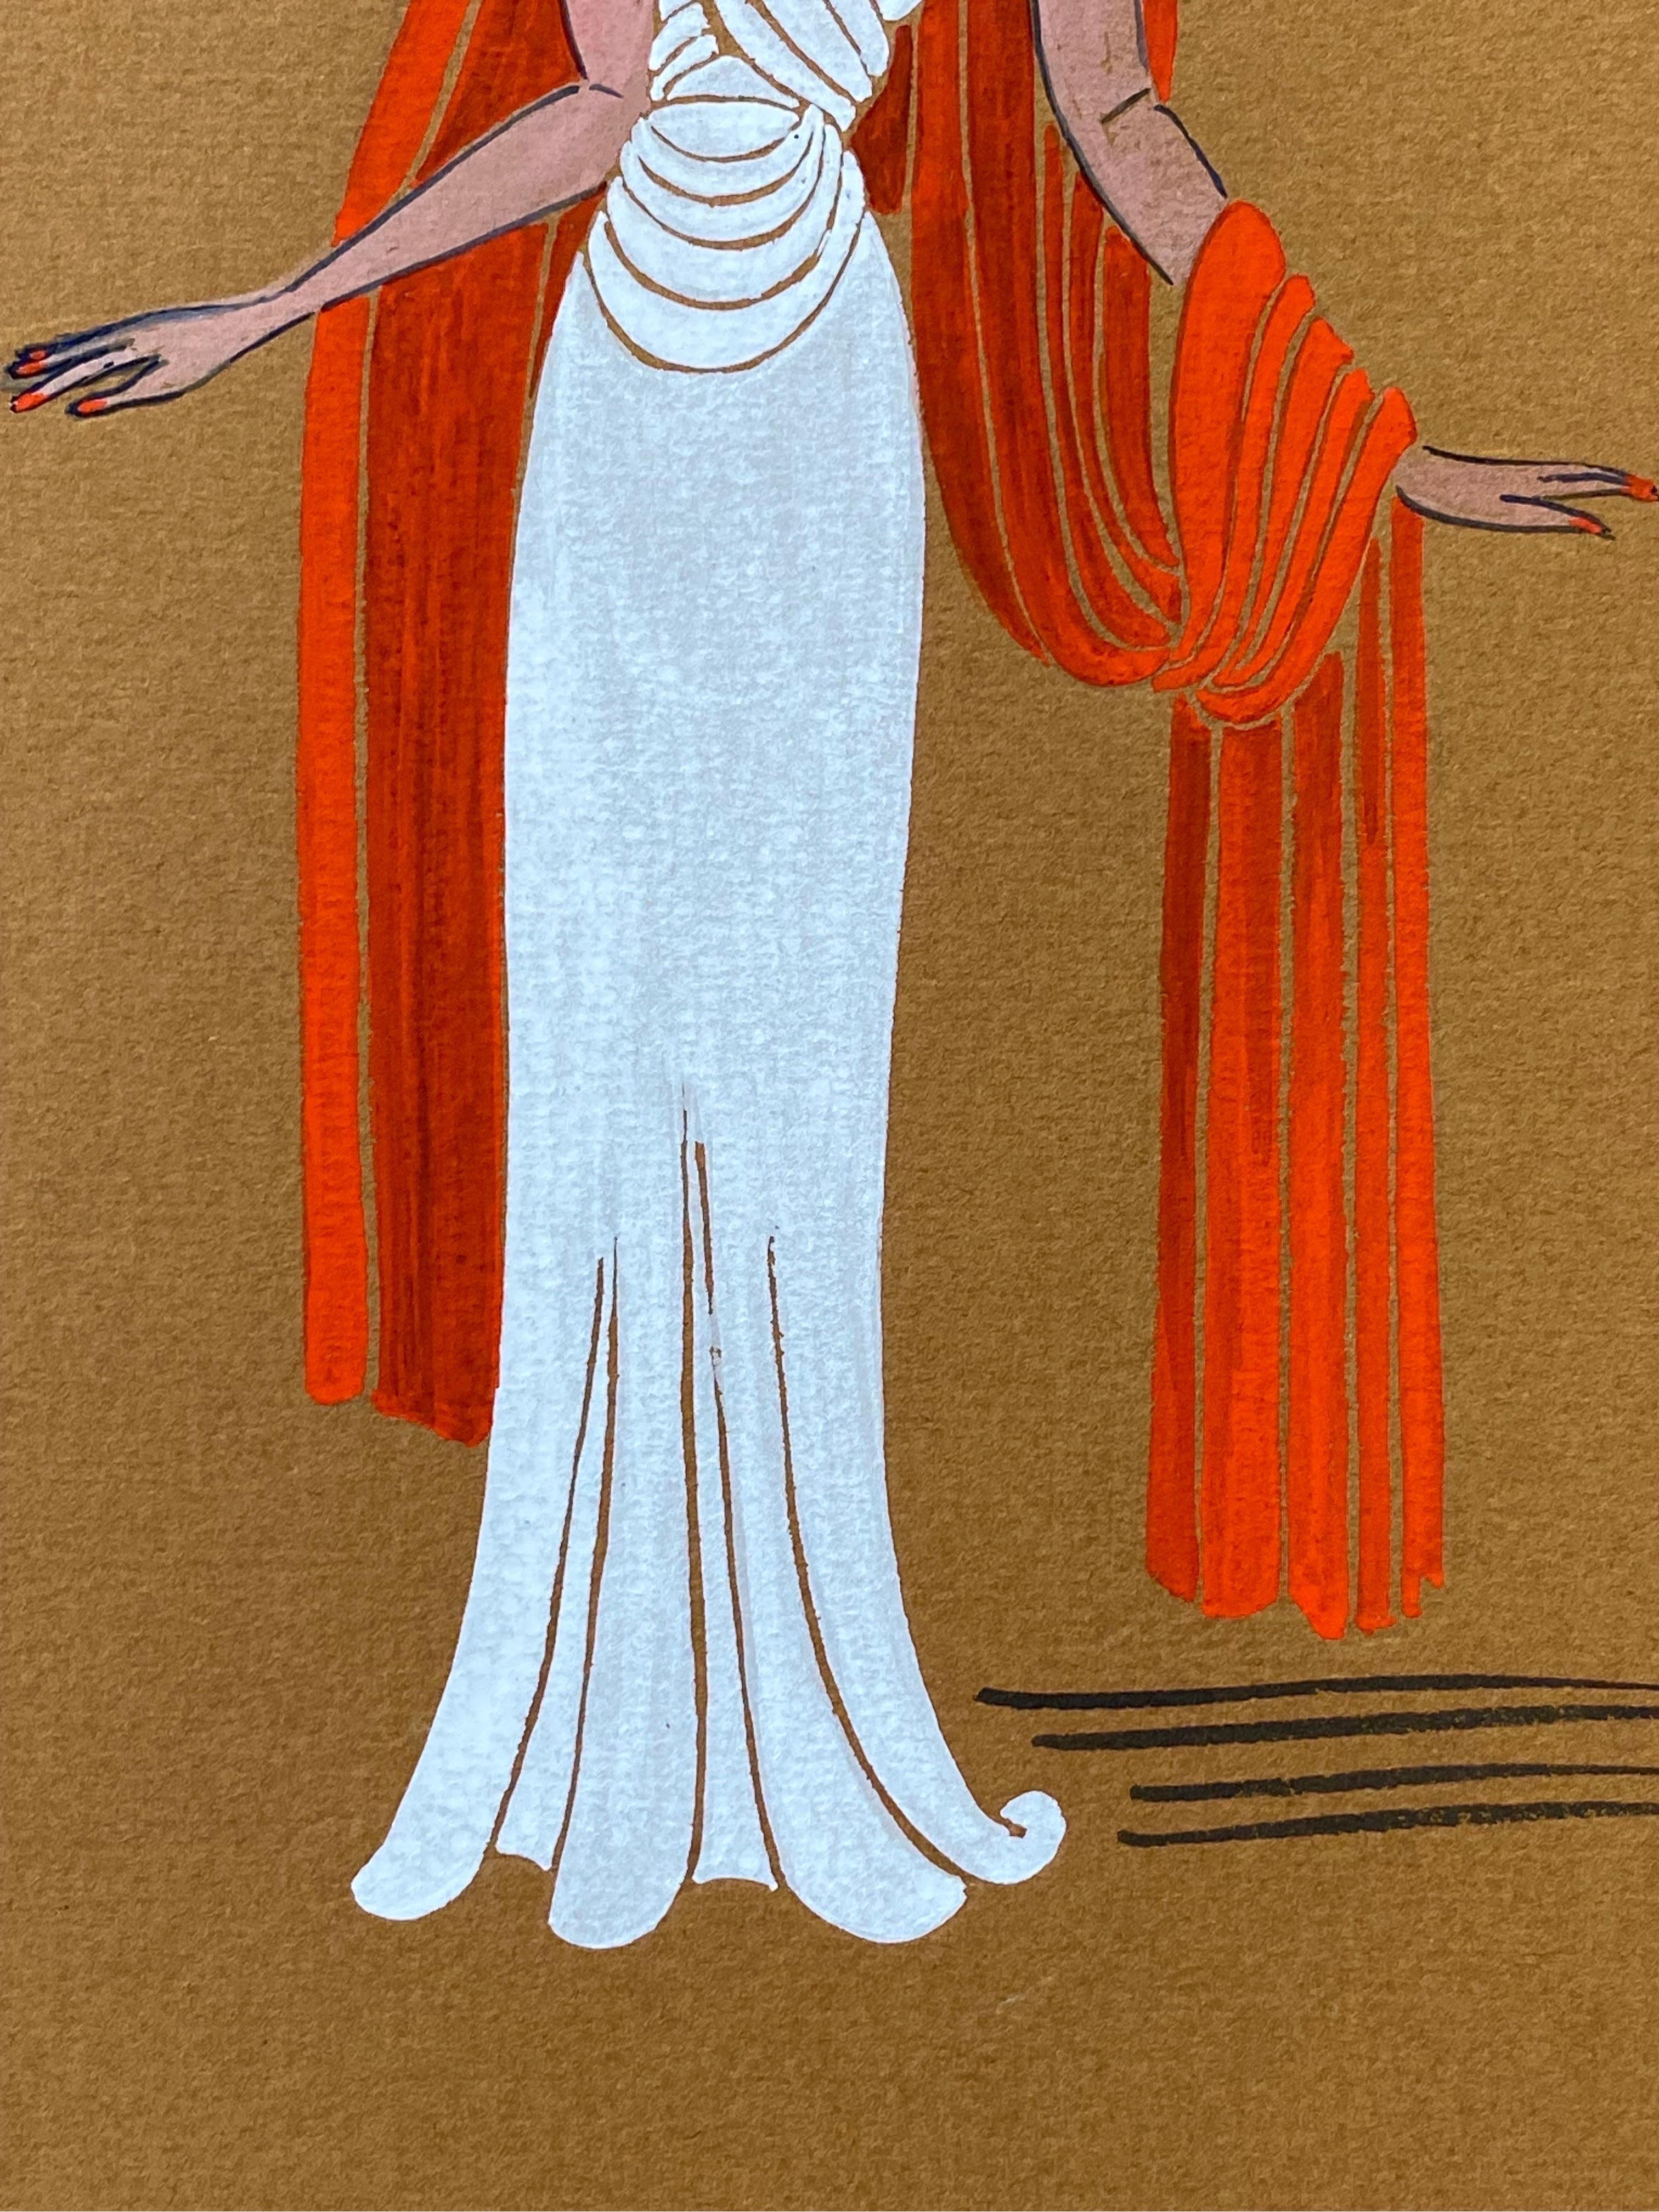 1940's Fashion Illustration - Lady In White Dress With Draped Orange Head Scarf - Impressionist Art by Geneviève Thomas